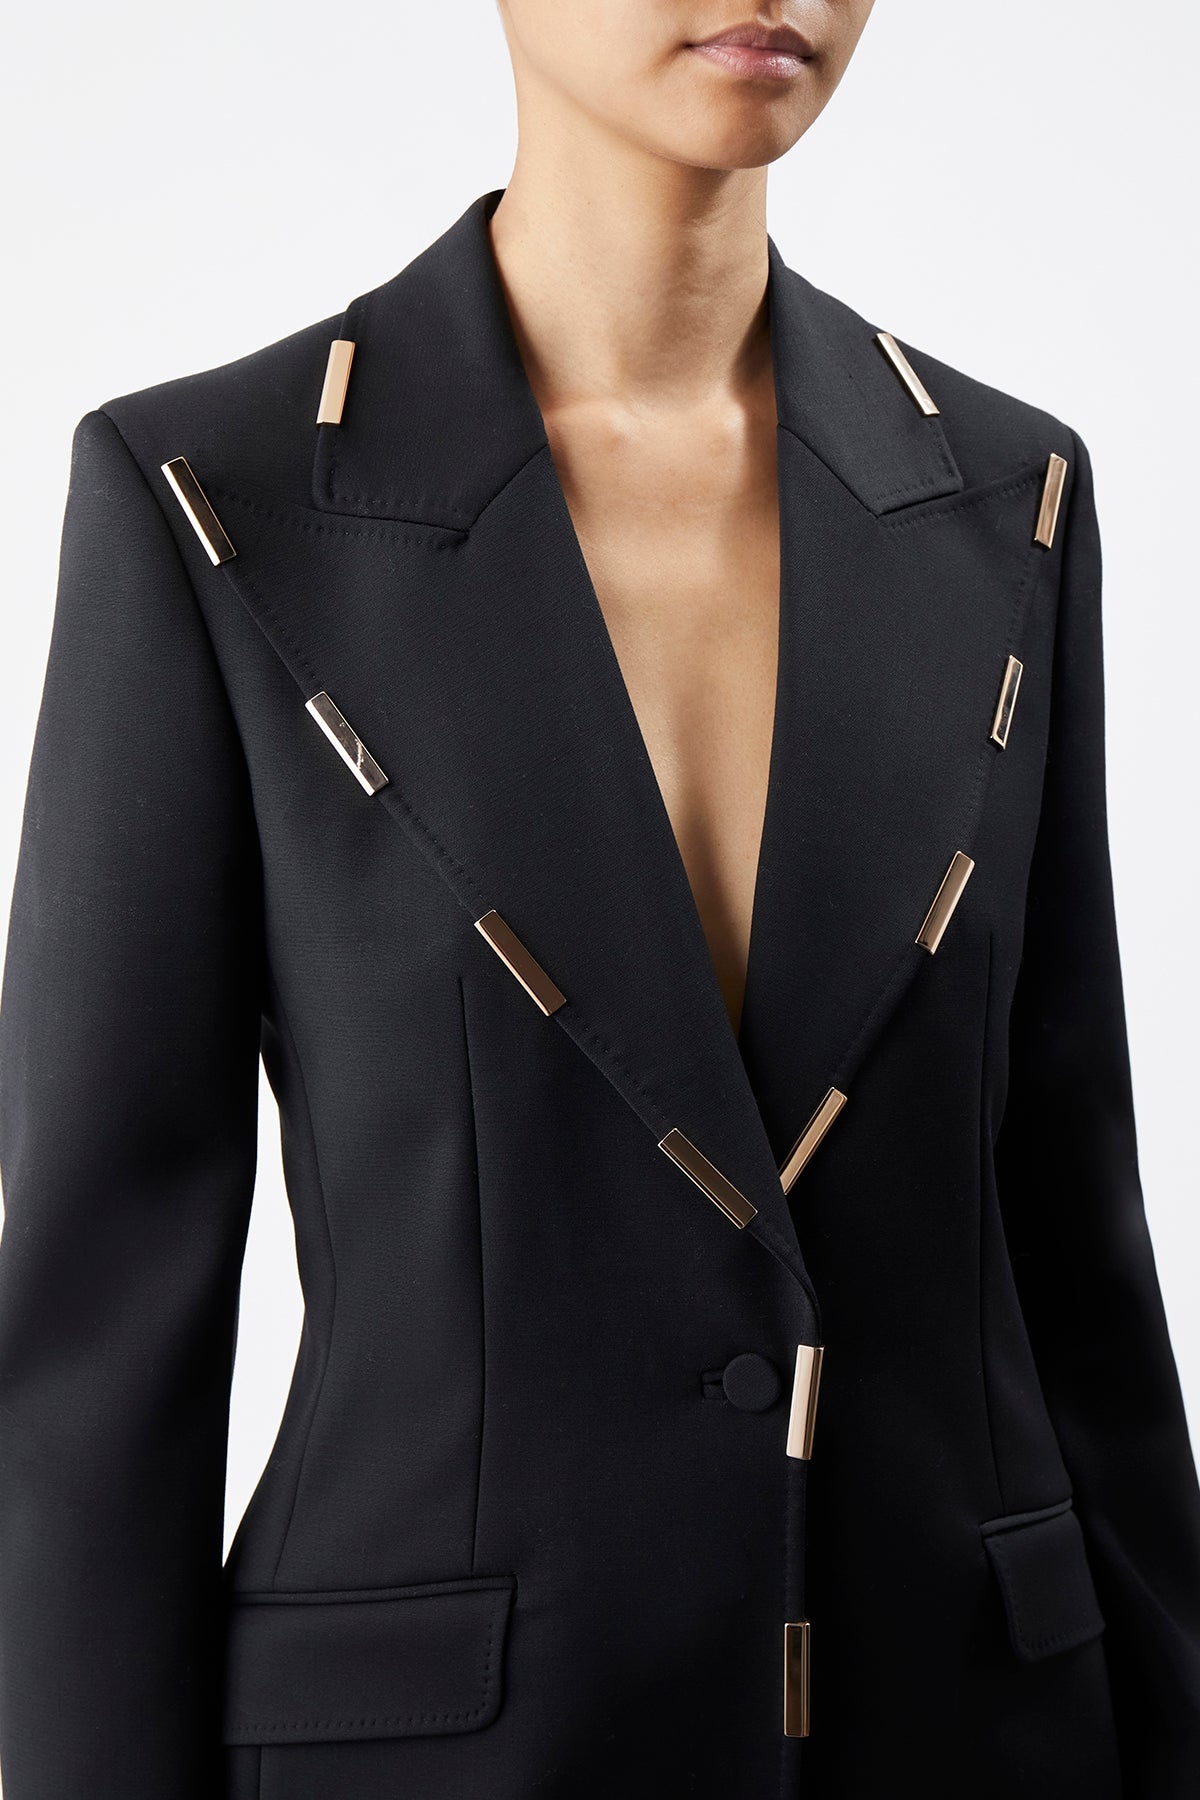 Leiva Blazer in Black Sportswear Wool with Gold Bars - 6